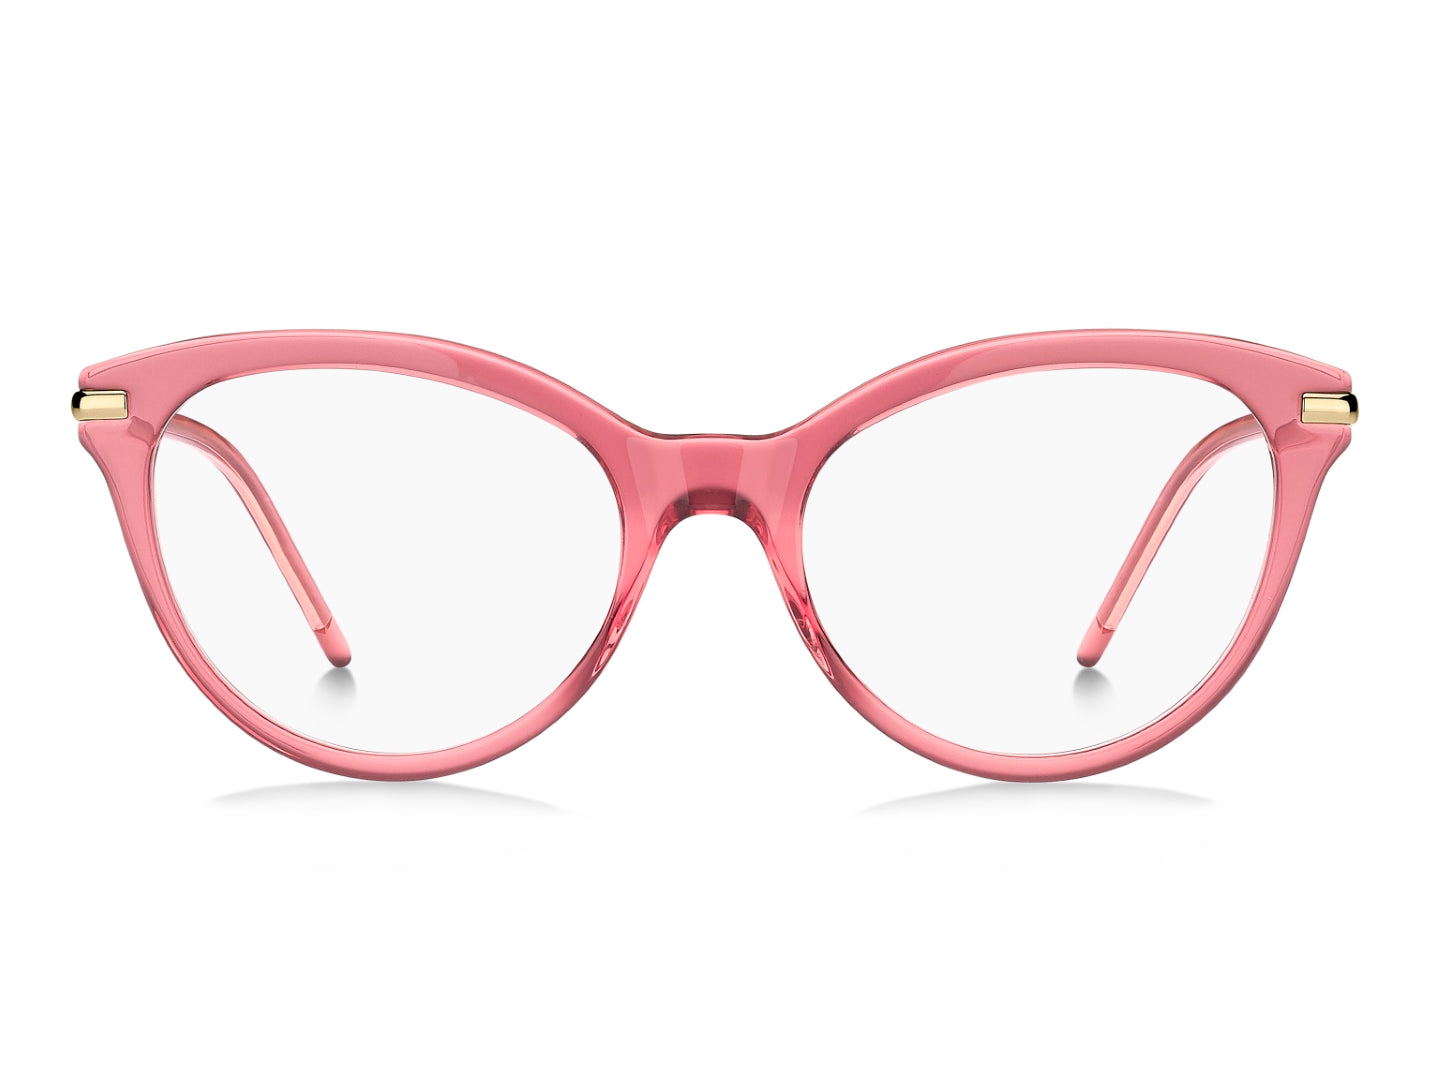 MARC JACOBS WOMAN PANTOS Eyeglasses -MARC 617 Size 52